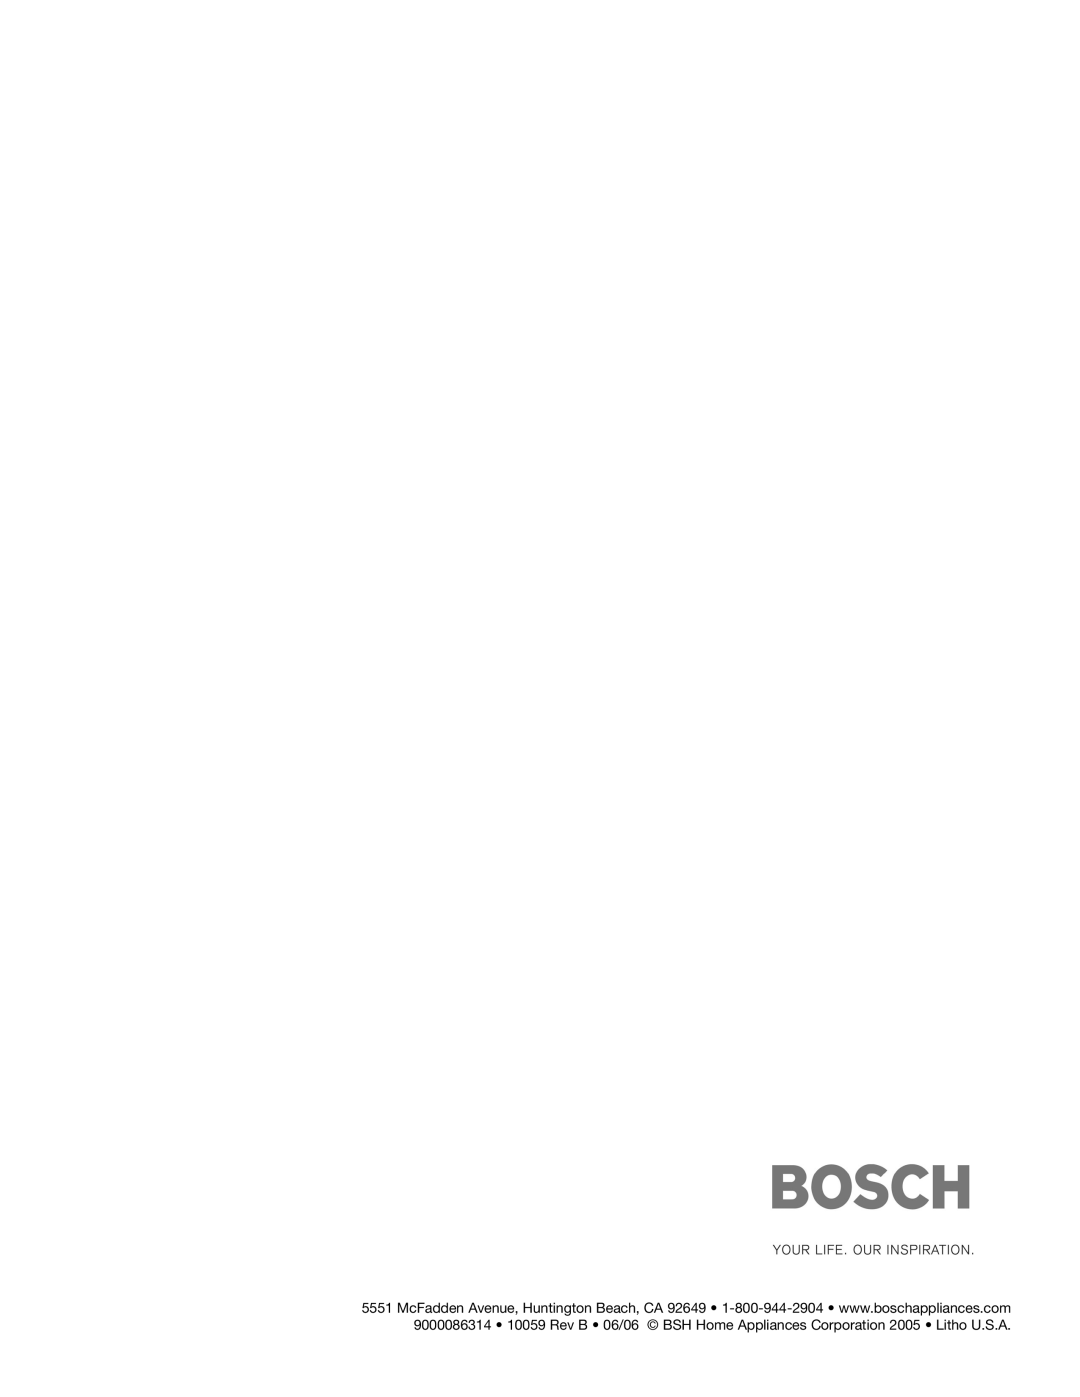 Bosch Appliances DKE96 installation manual McFadden Avenue, Huntington Beach, CA, Rev B 06/06 BSH Home, 2005, U.S.A 